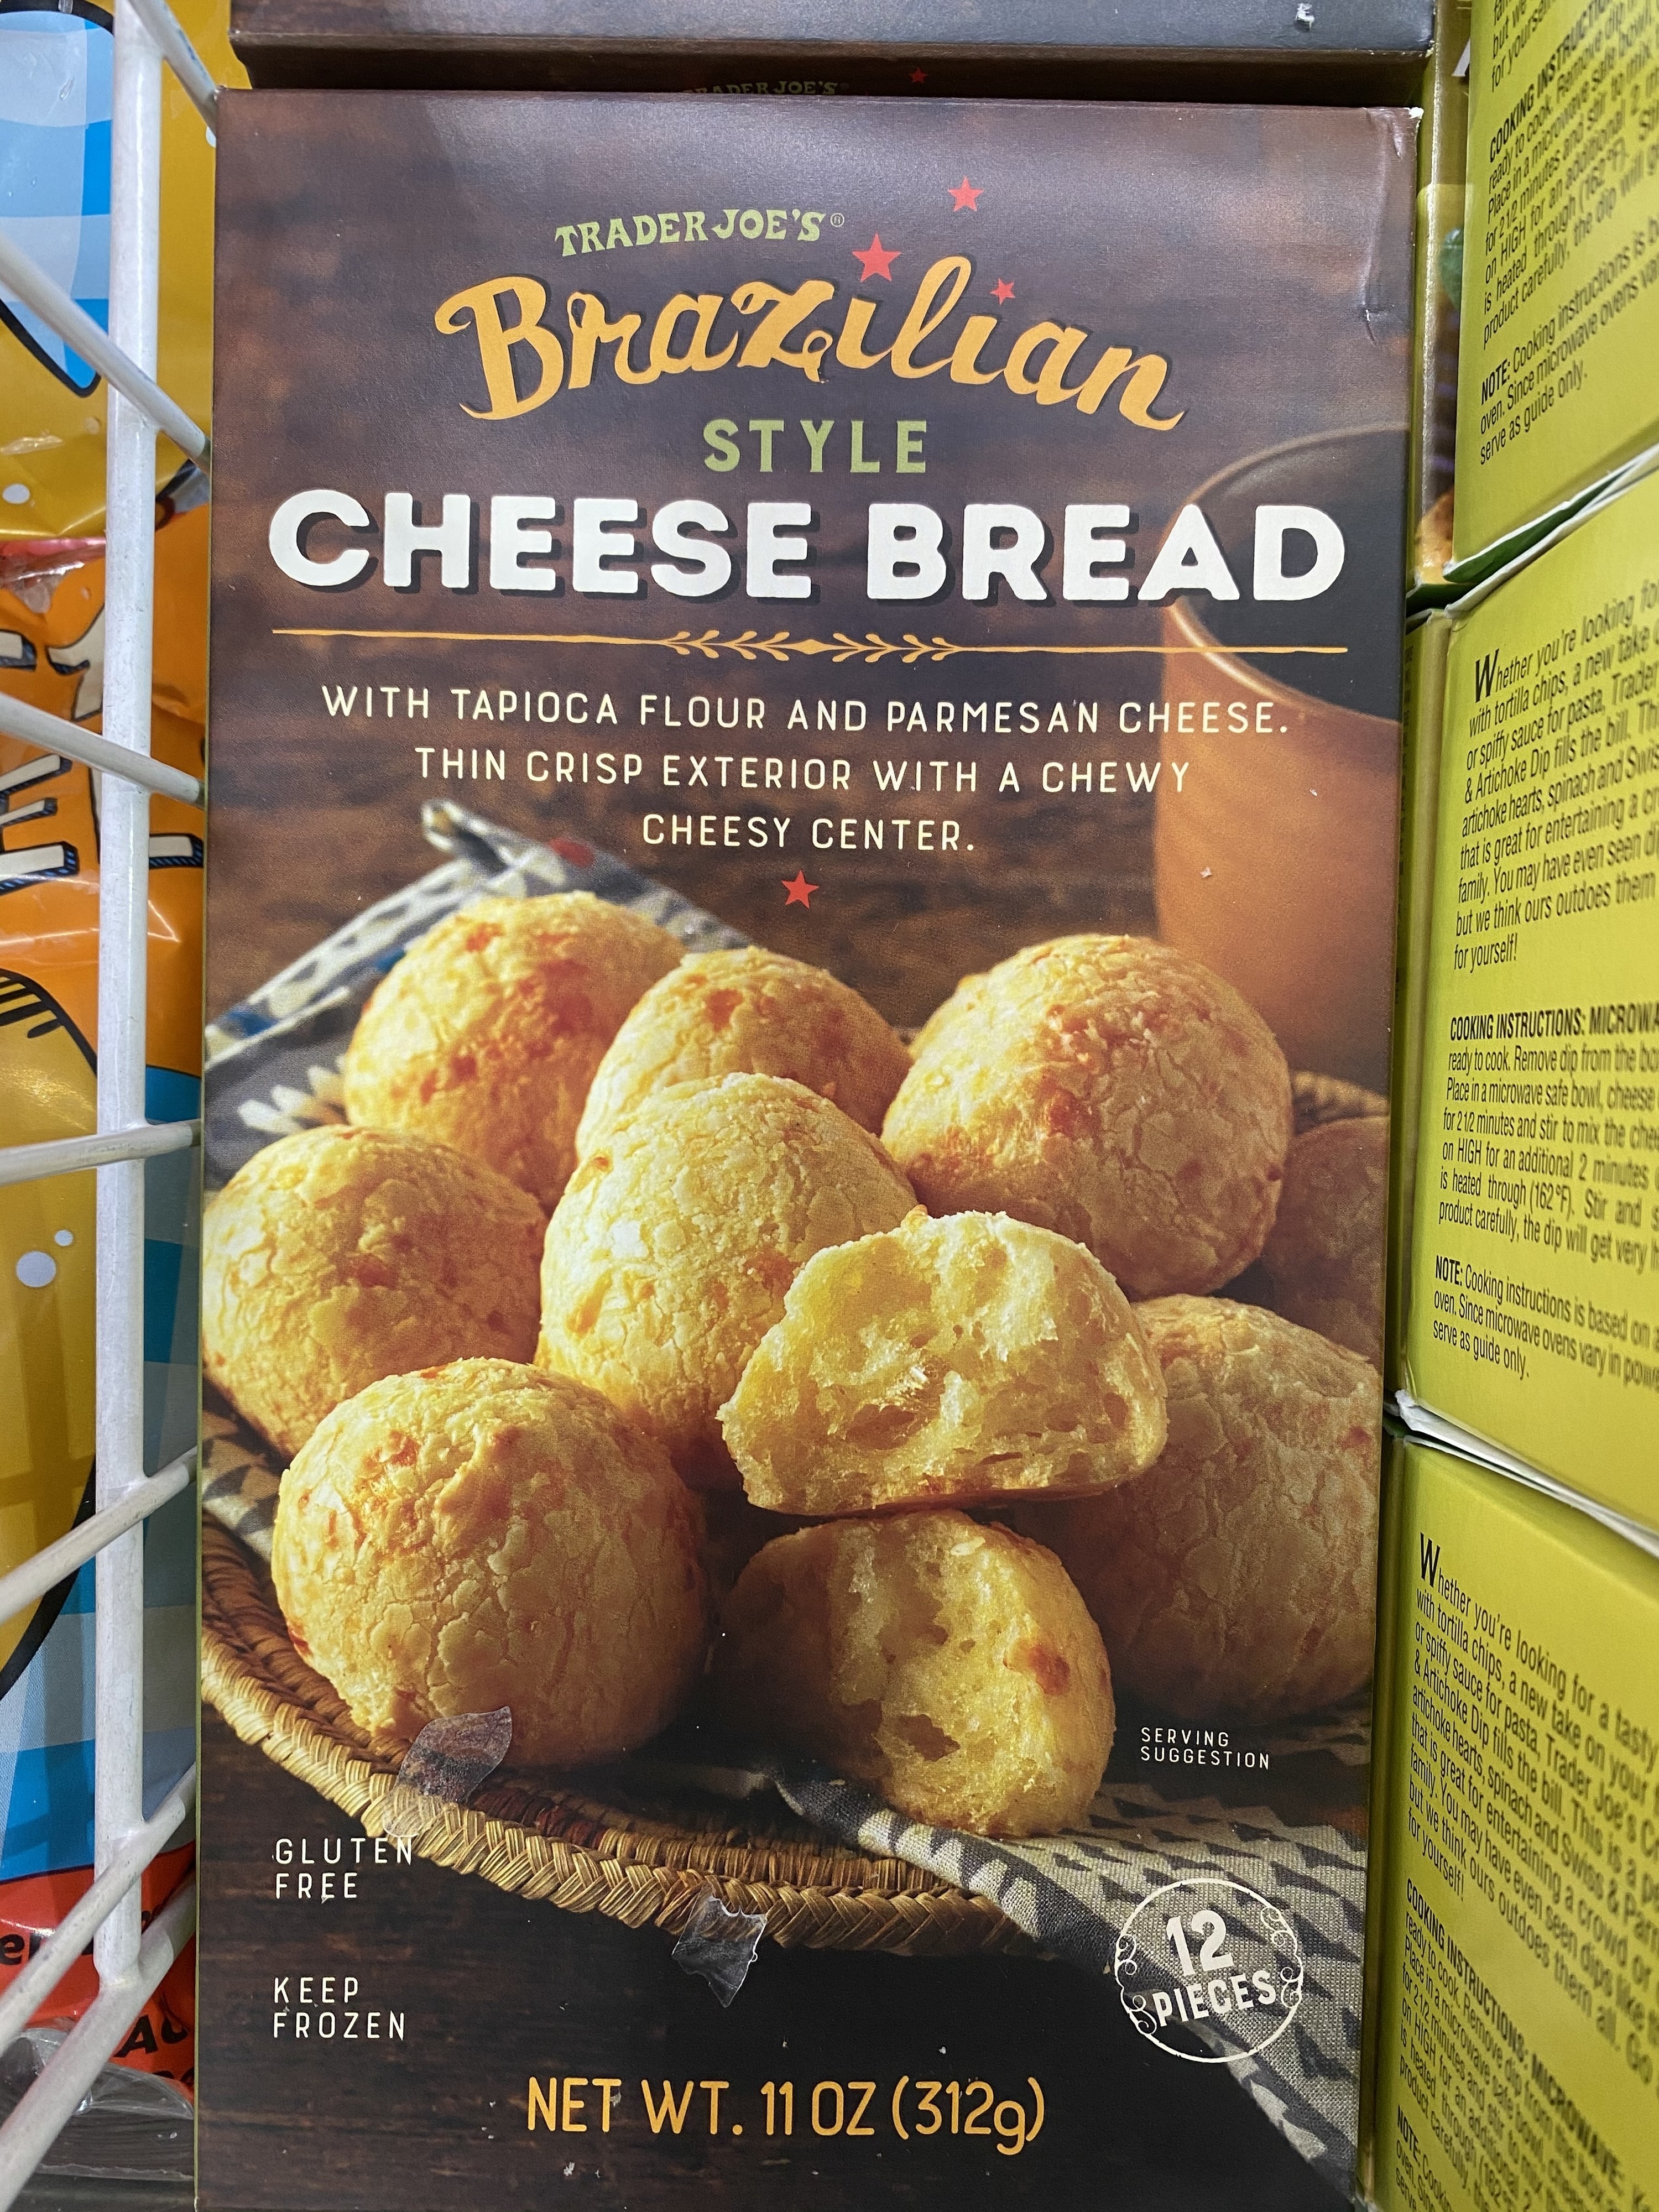 A box of Brazilian Style Cheese Bread.